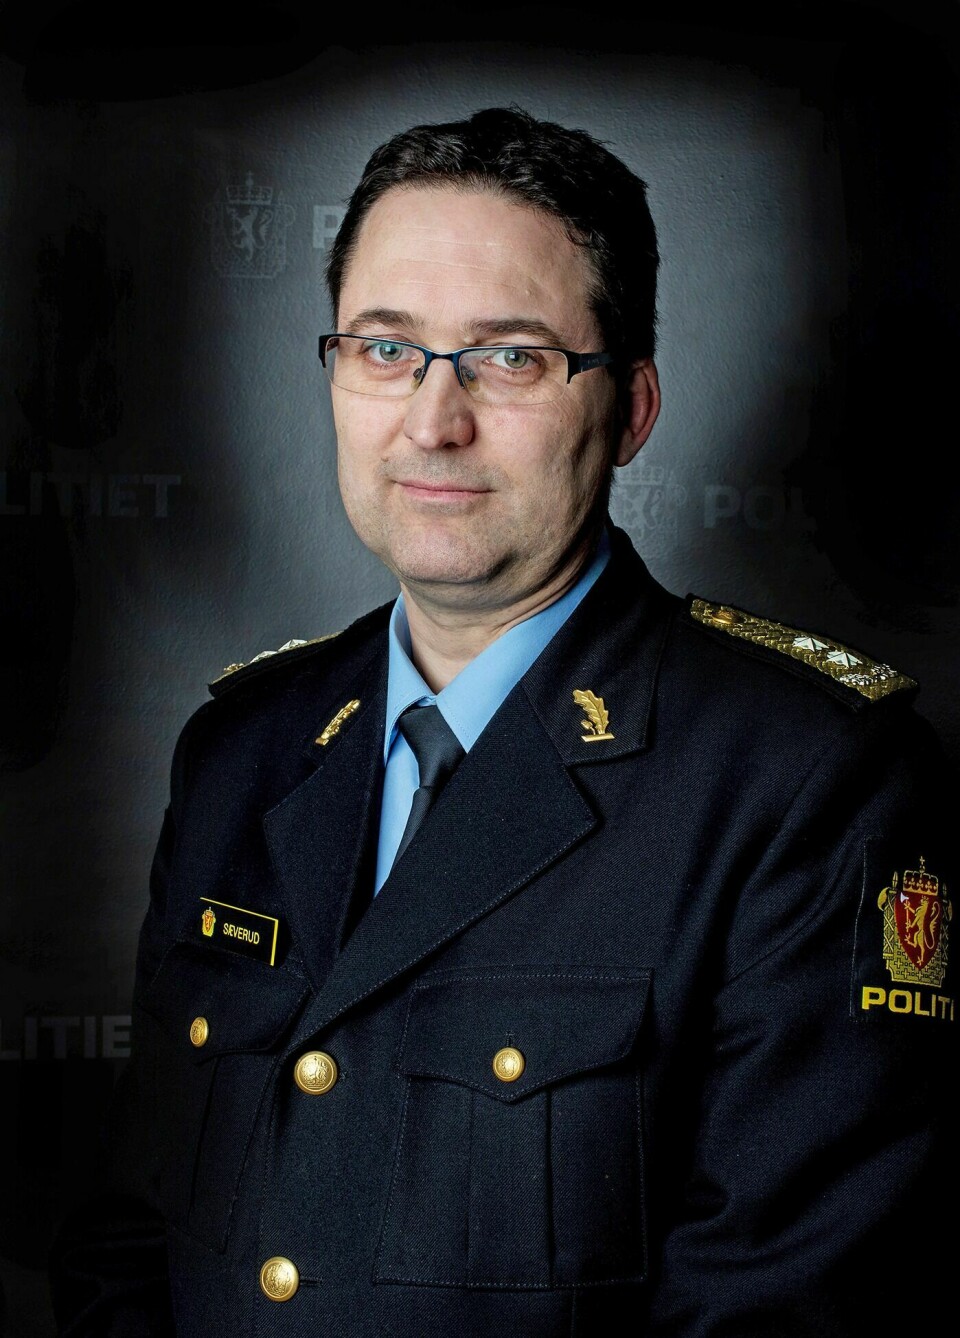 Politimester i Troms, Ole B. Sæverud. Foto: Politiet